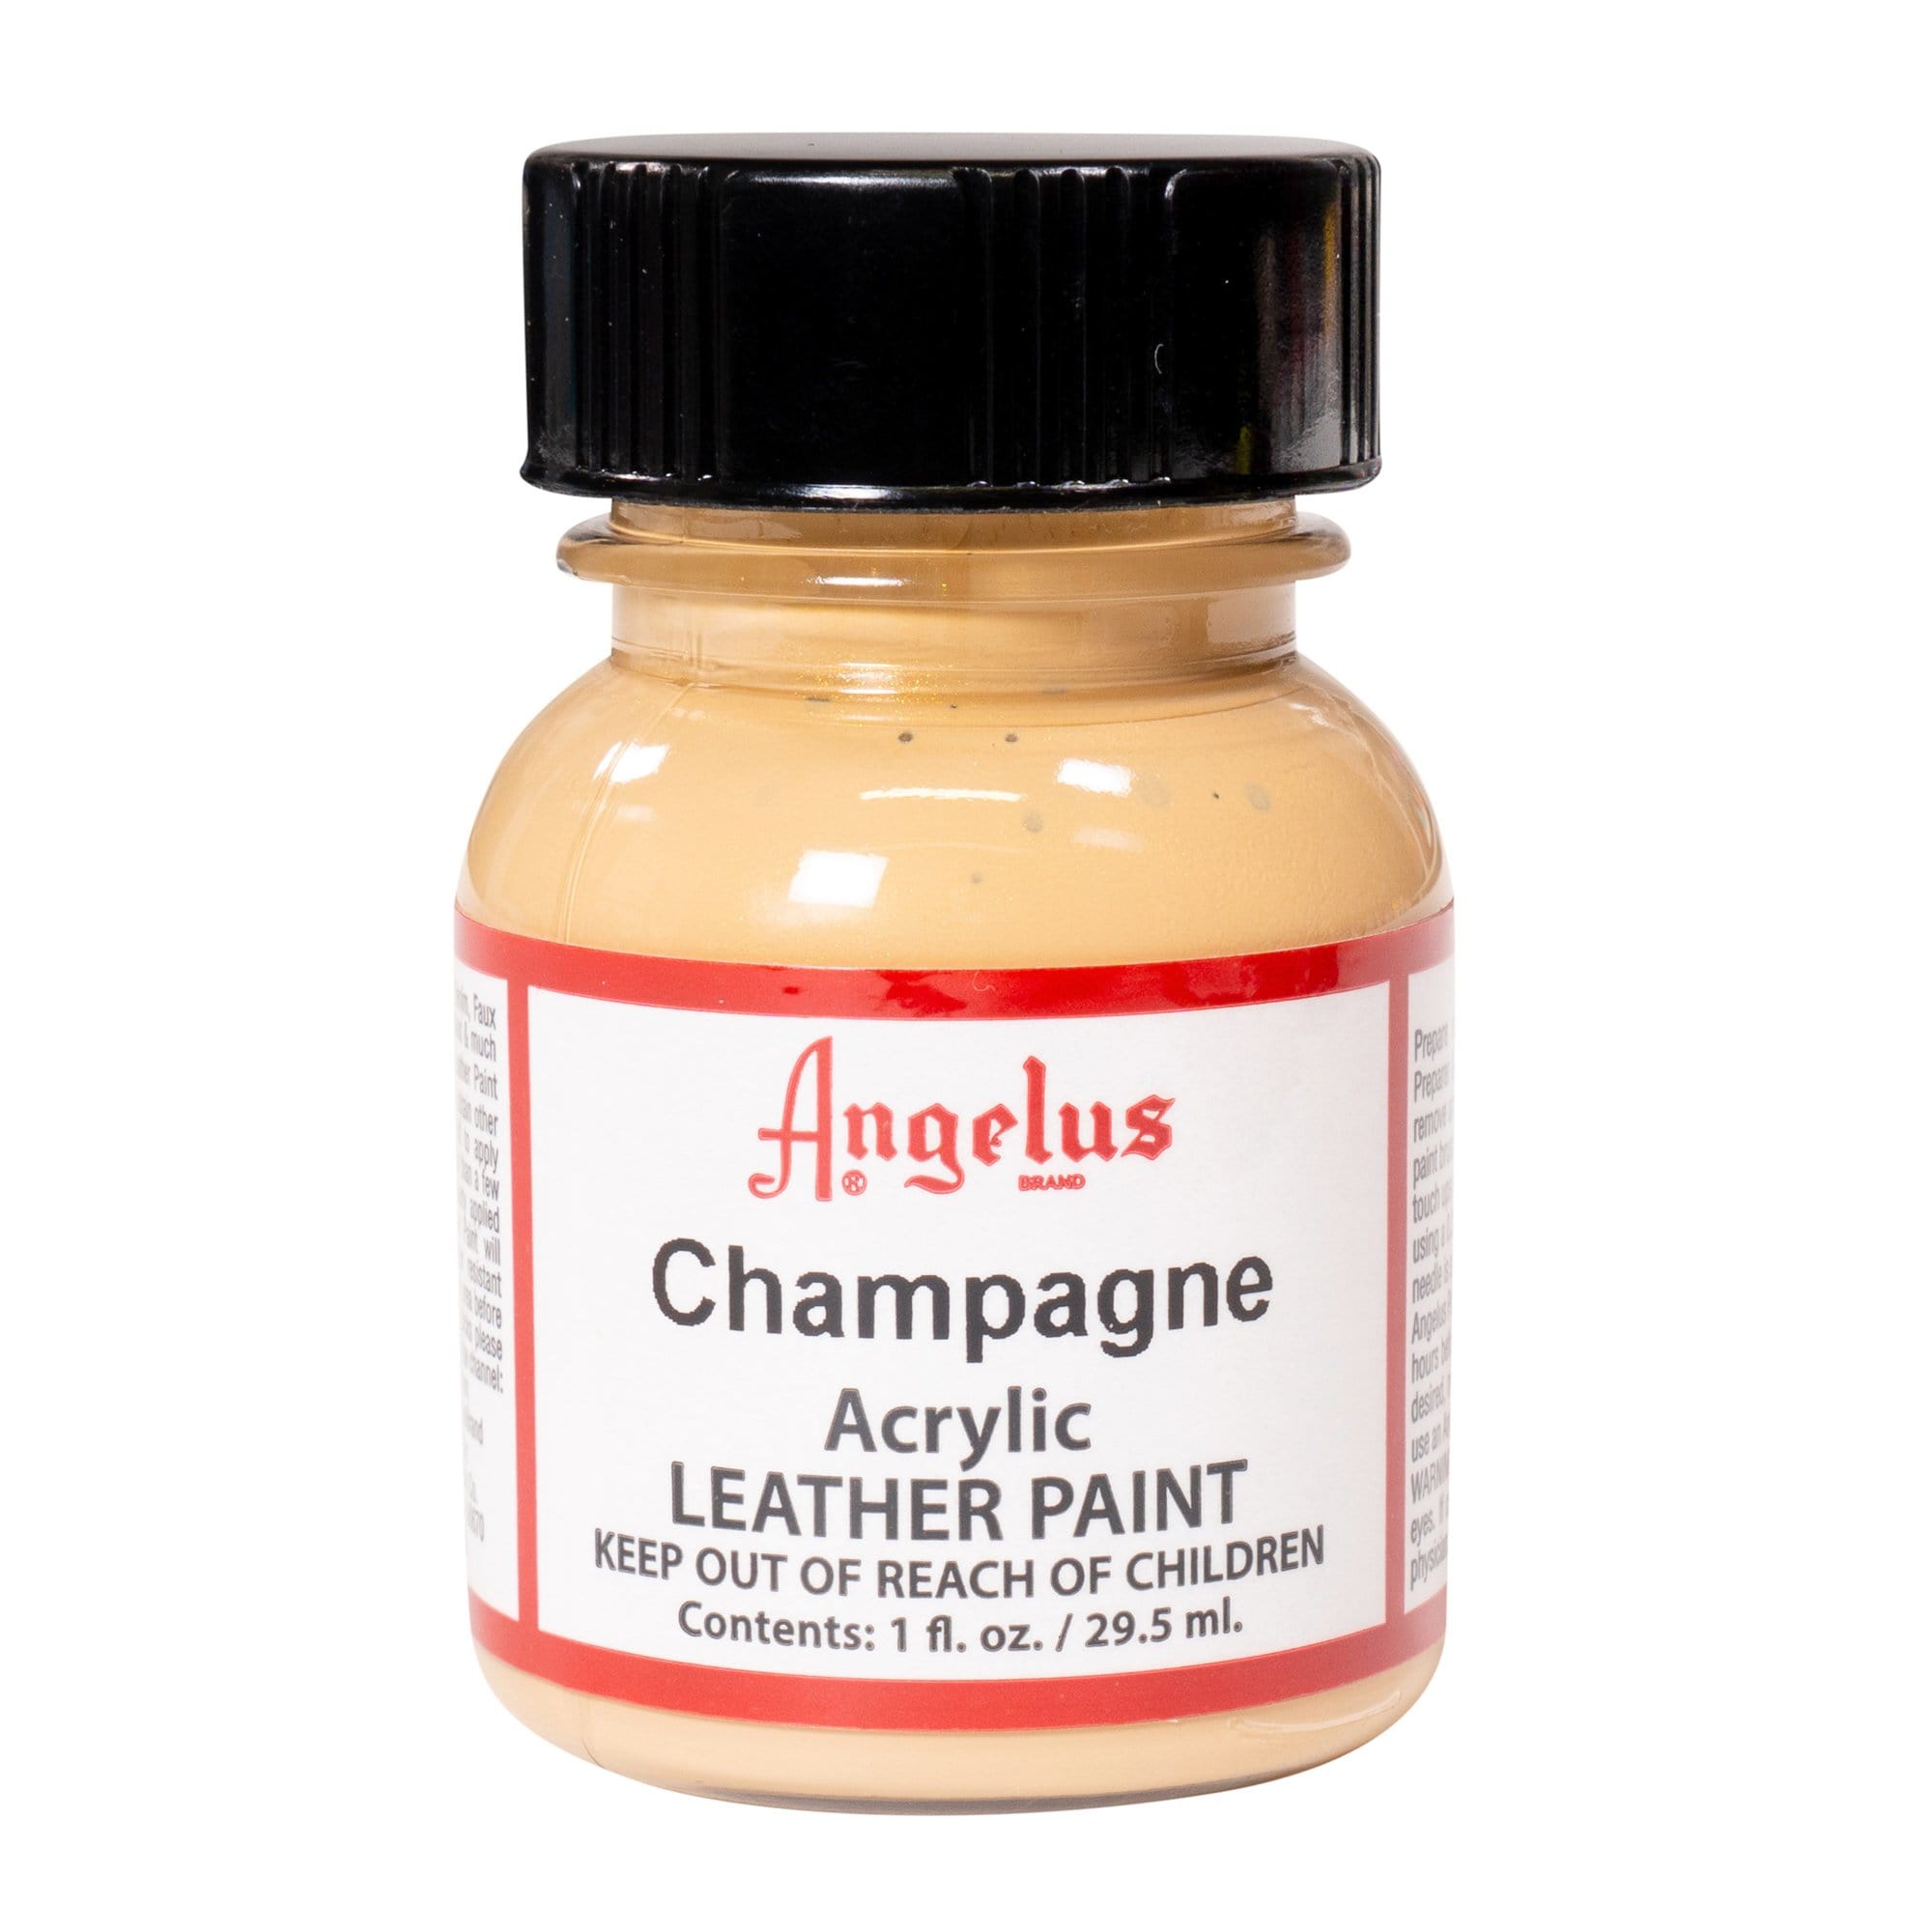 Angelus Acrylic Leather Paint - Champagne, 1 oz